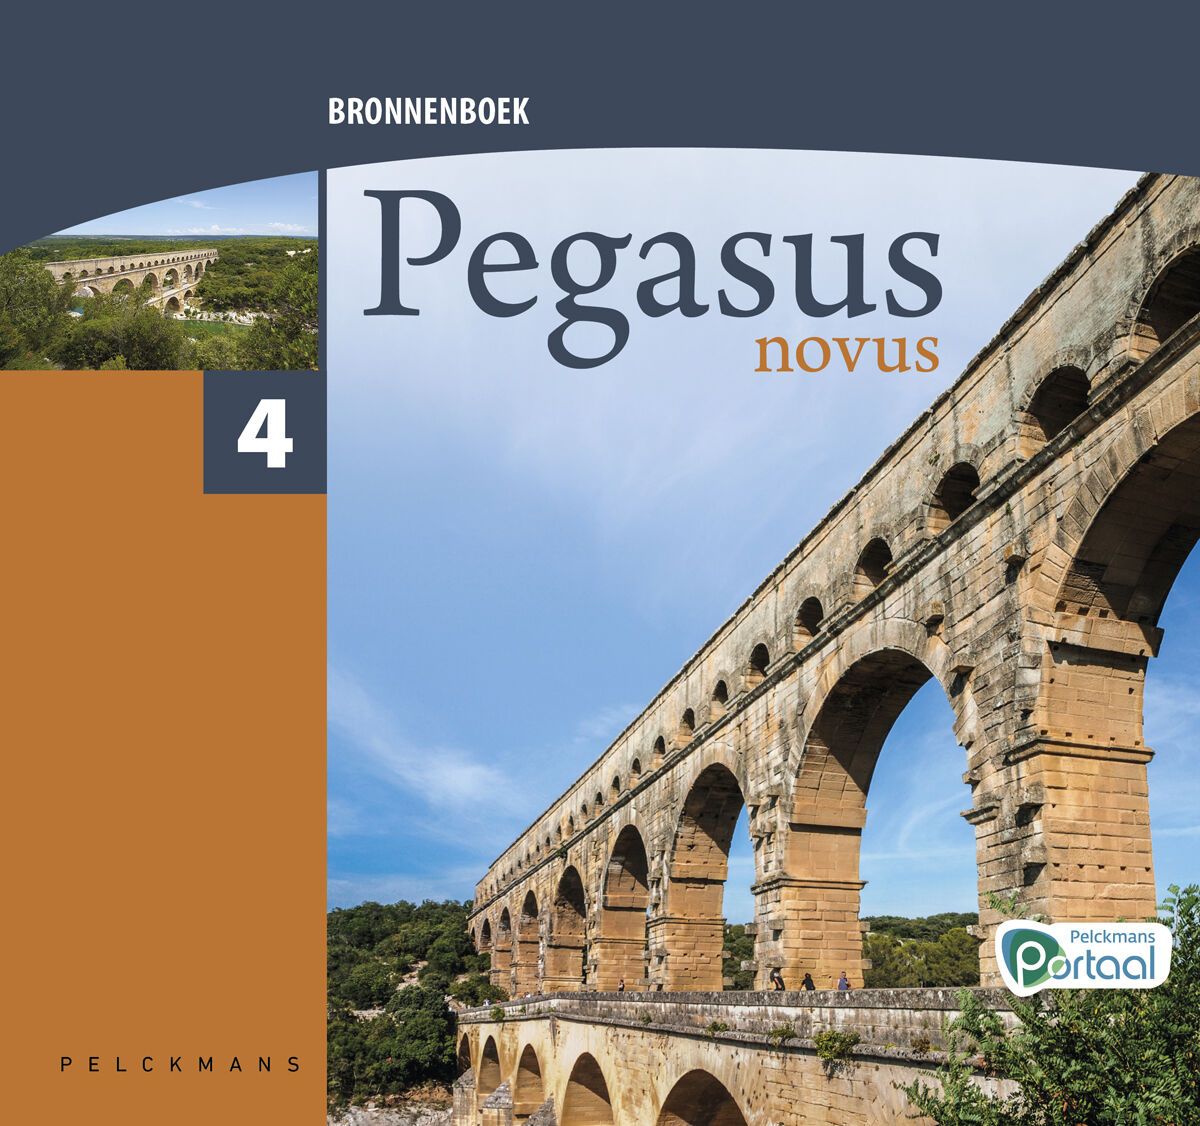 Pegasus novus 4 Bronnenboek (incl. Pelckmans Portaal)